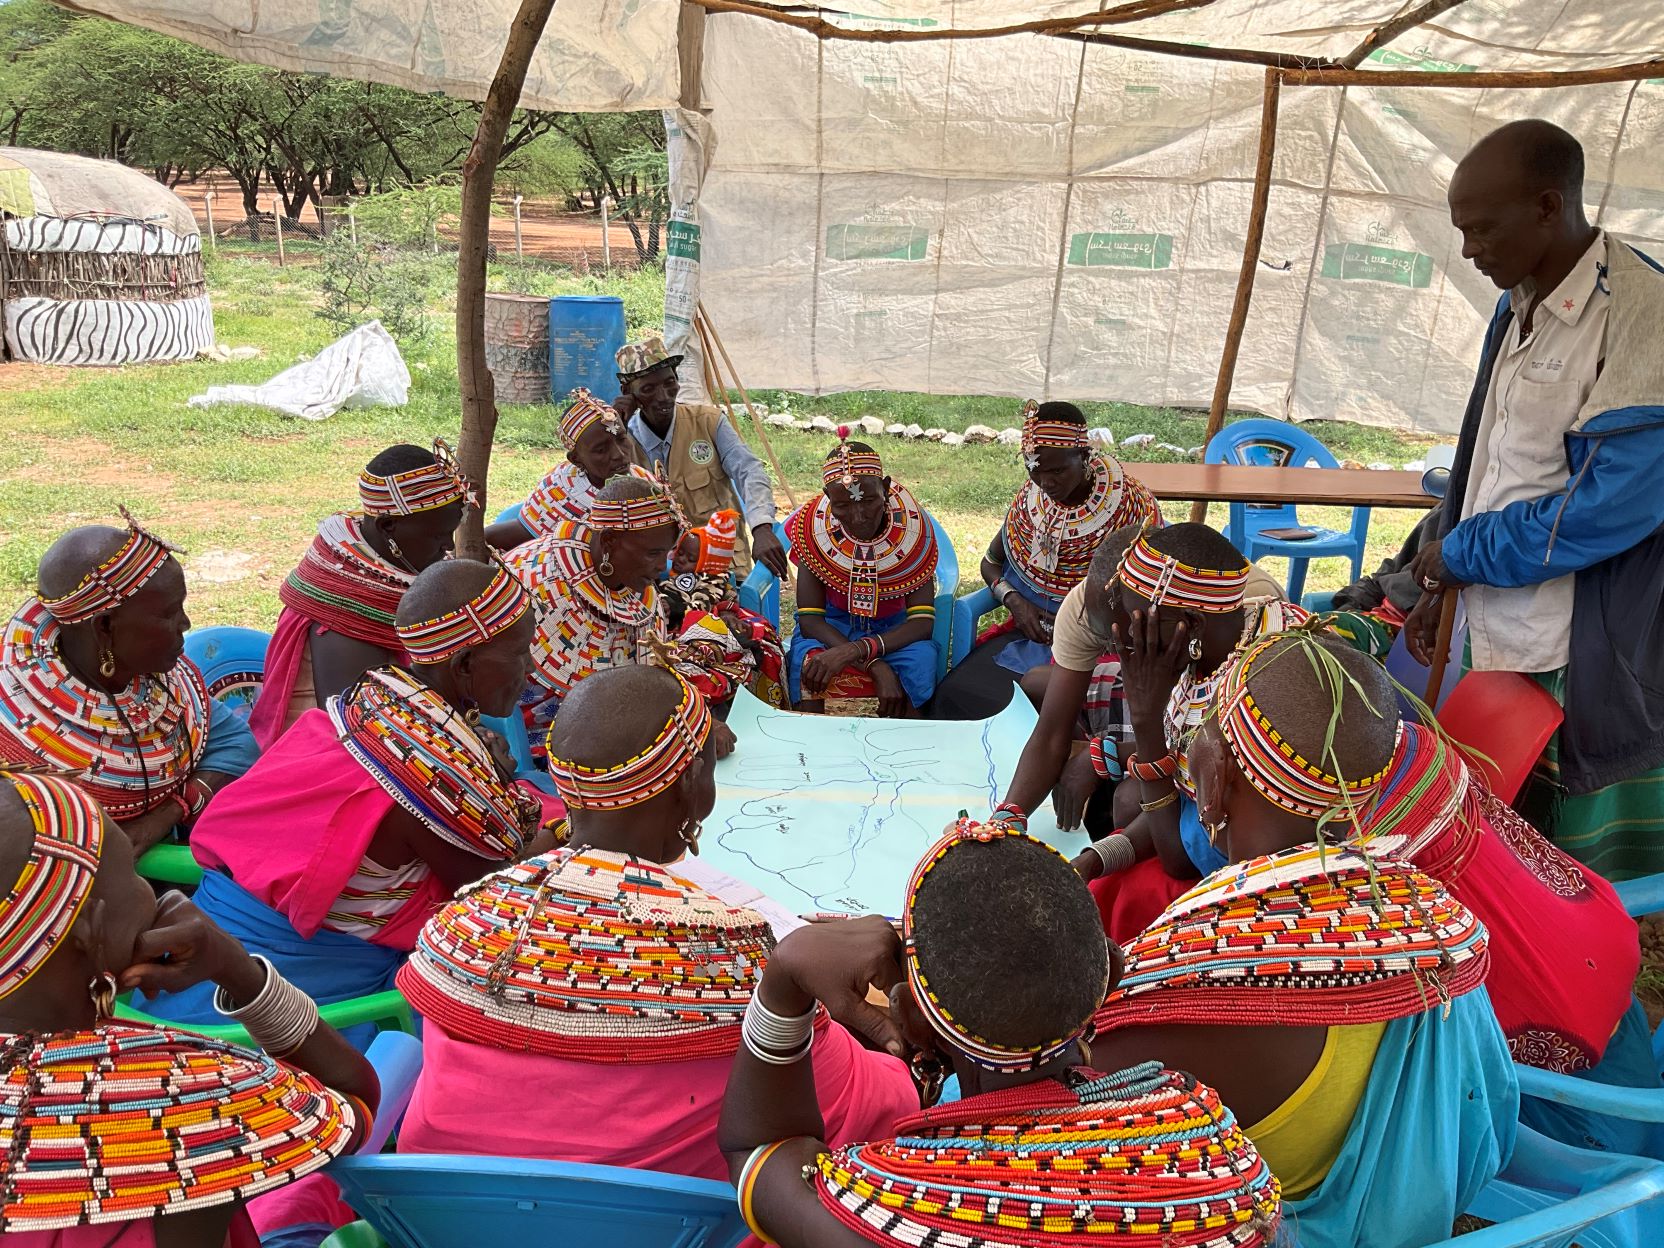 Community Resource Mapping at Kiltamany Samburu county